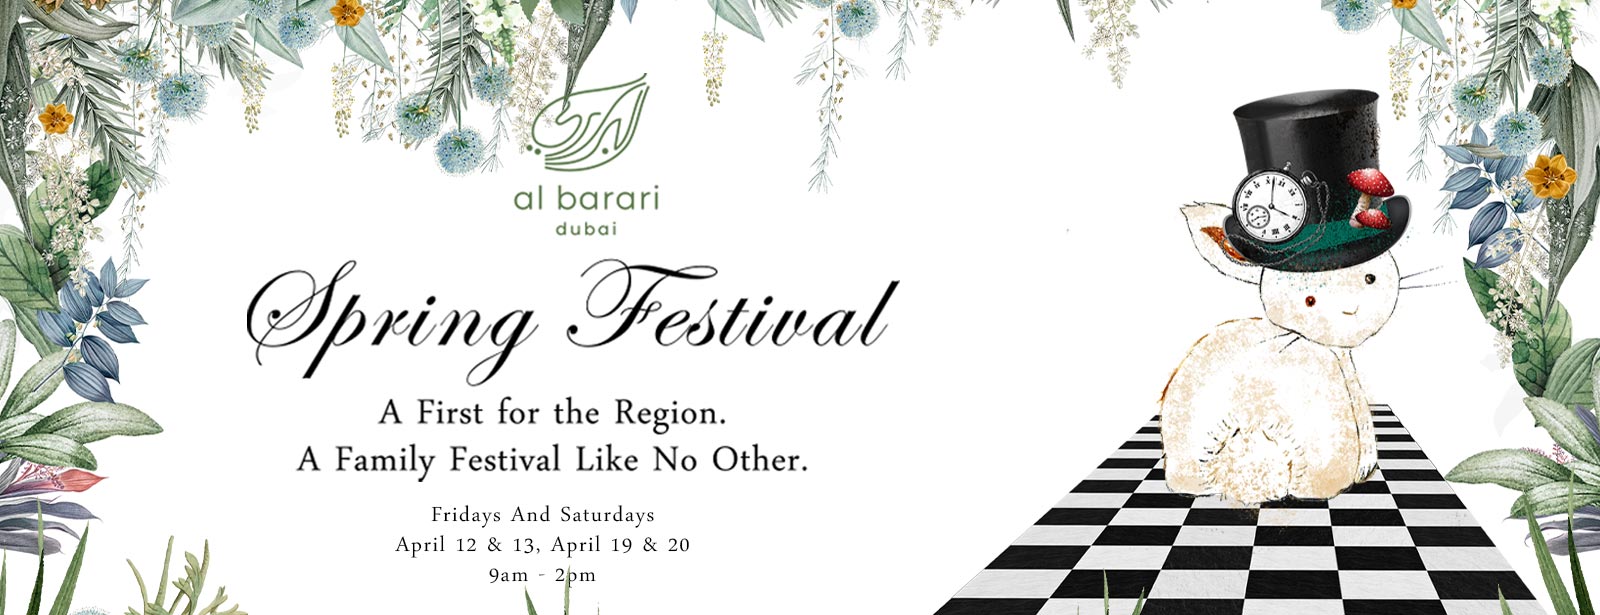 Spring Festival at Al Barari - Coming Soon in UAE